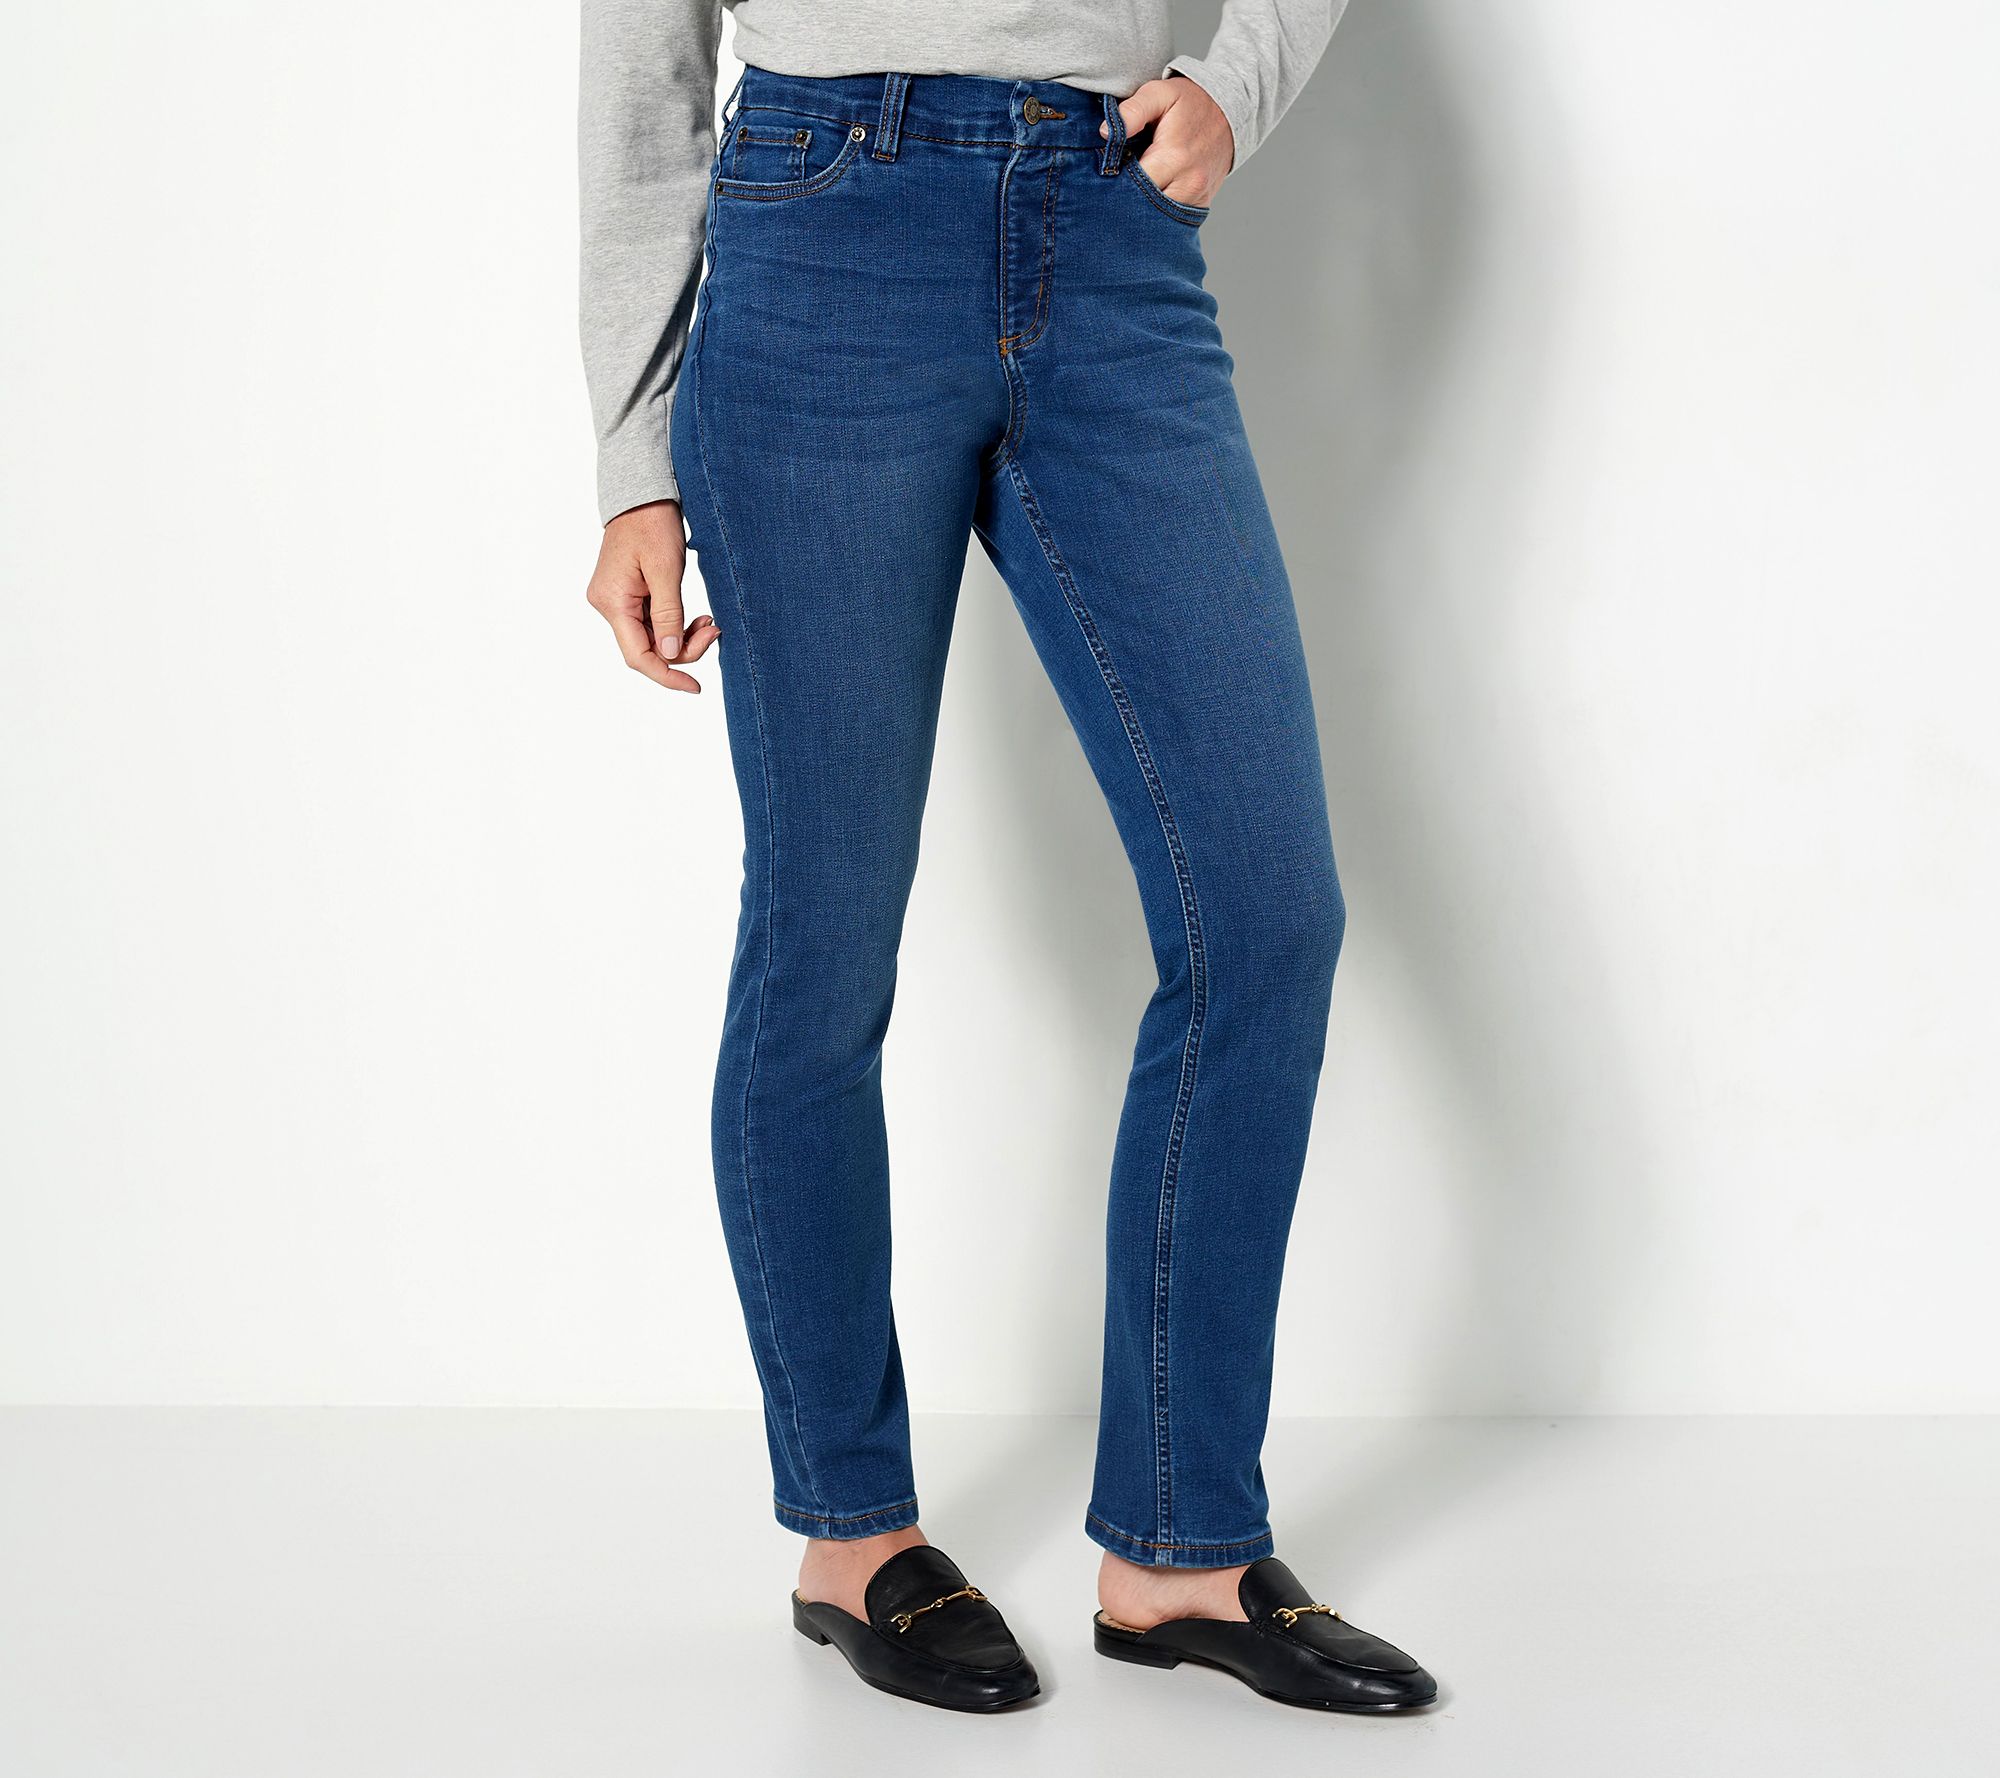 Womens Skinny Denim Plain Jeans Ladies Slim Pocket Fitted Stretch Pants Trouser 